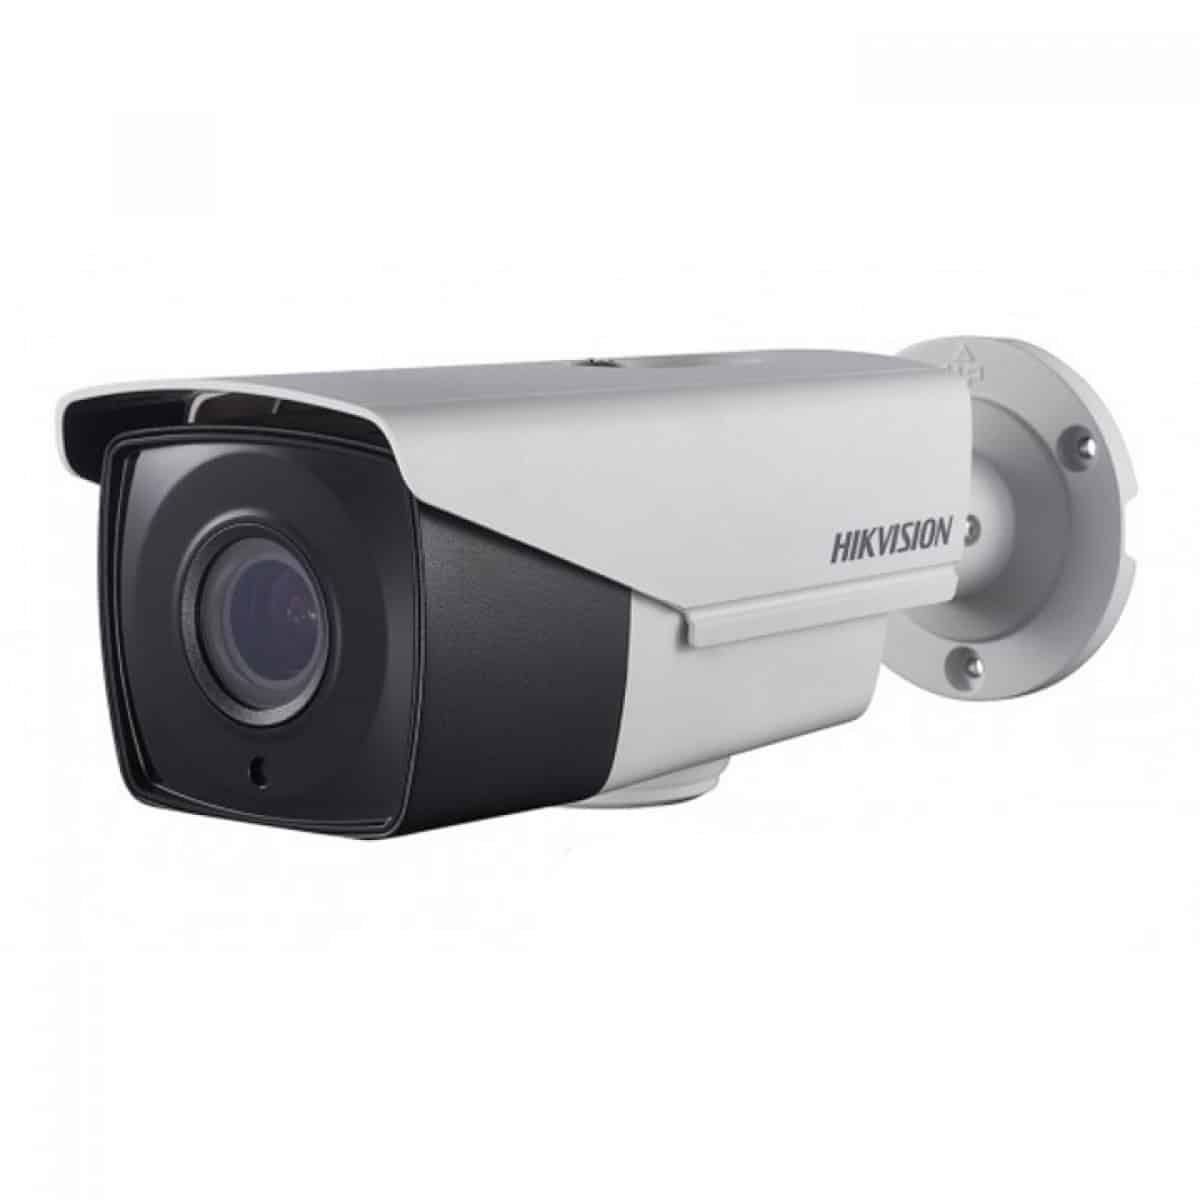 hikvision 60fps camera